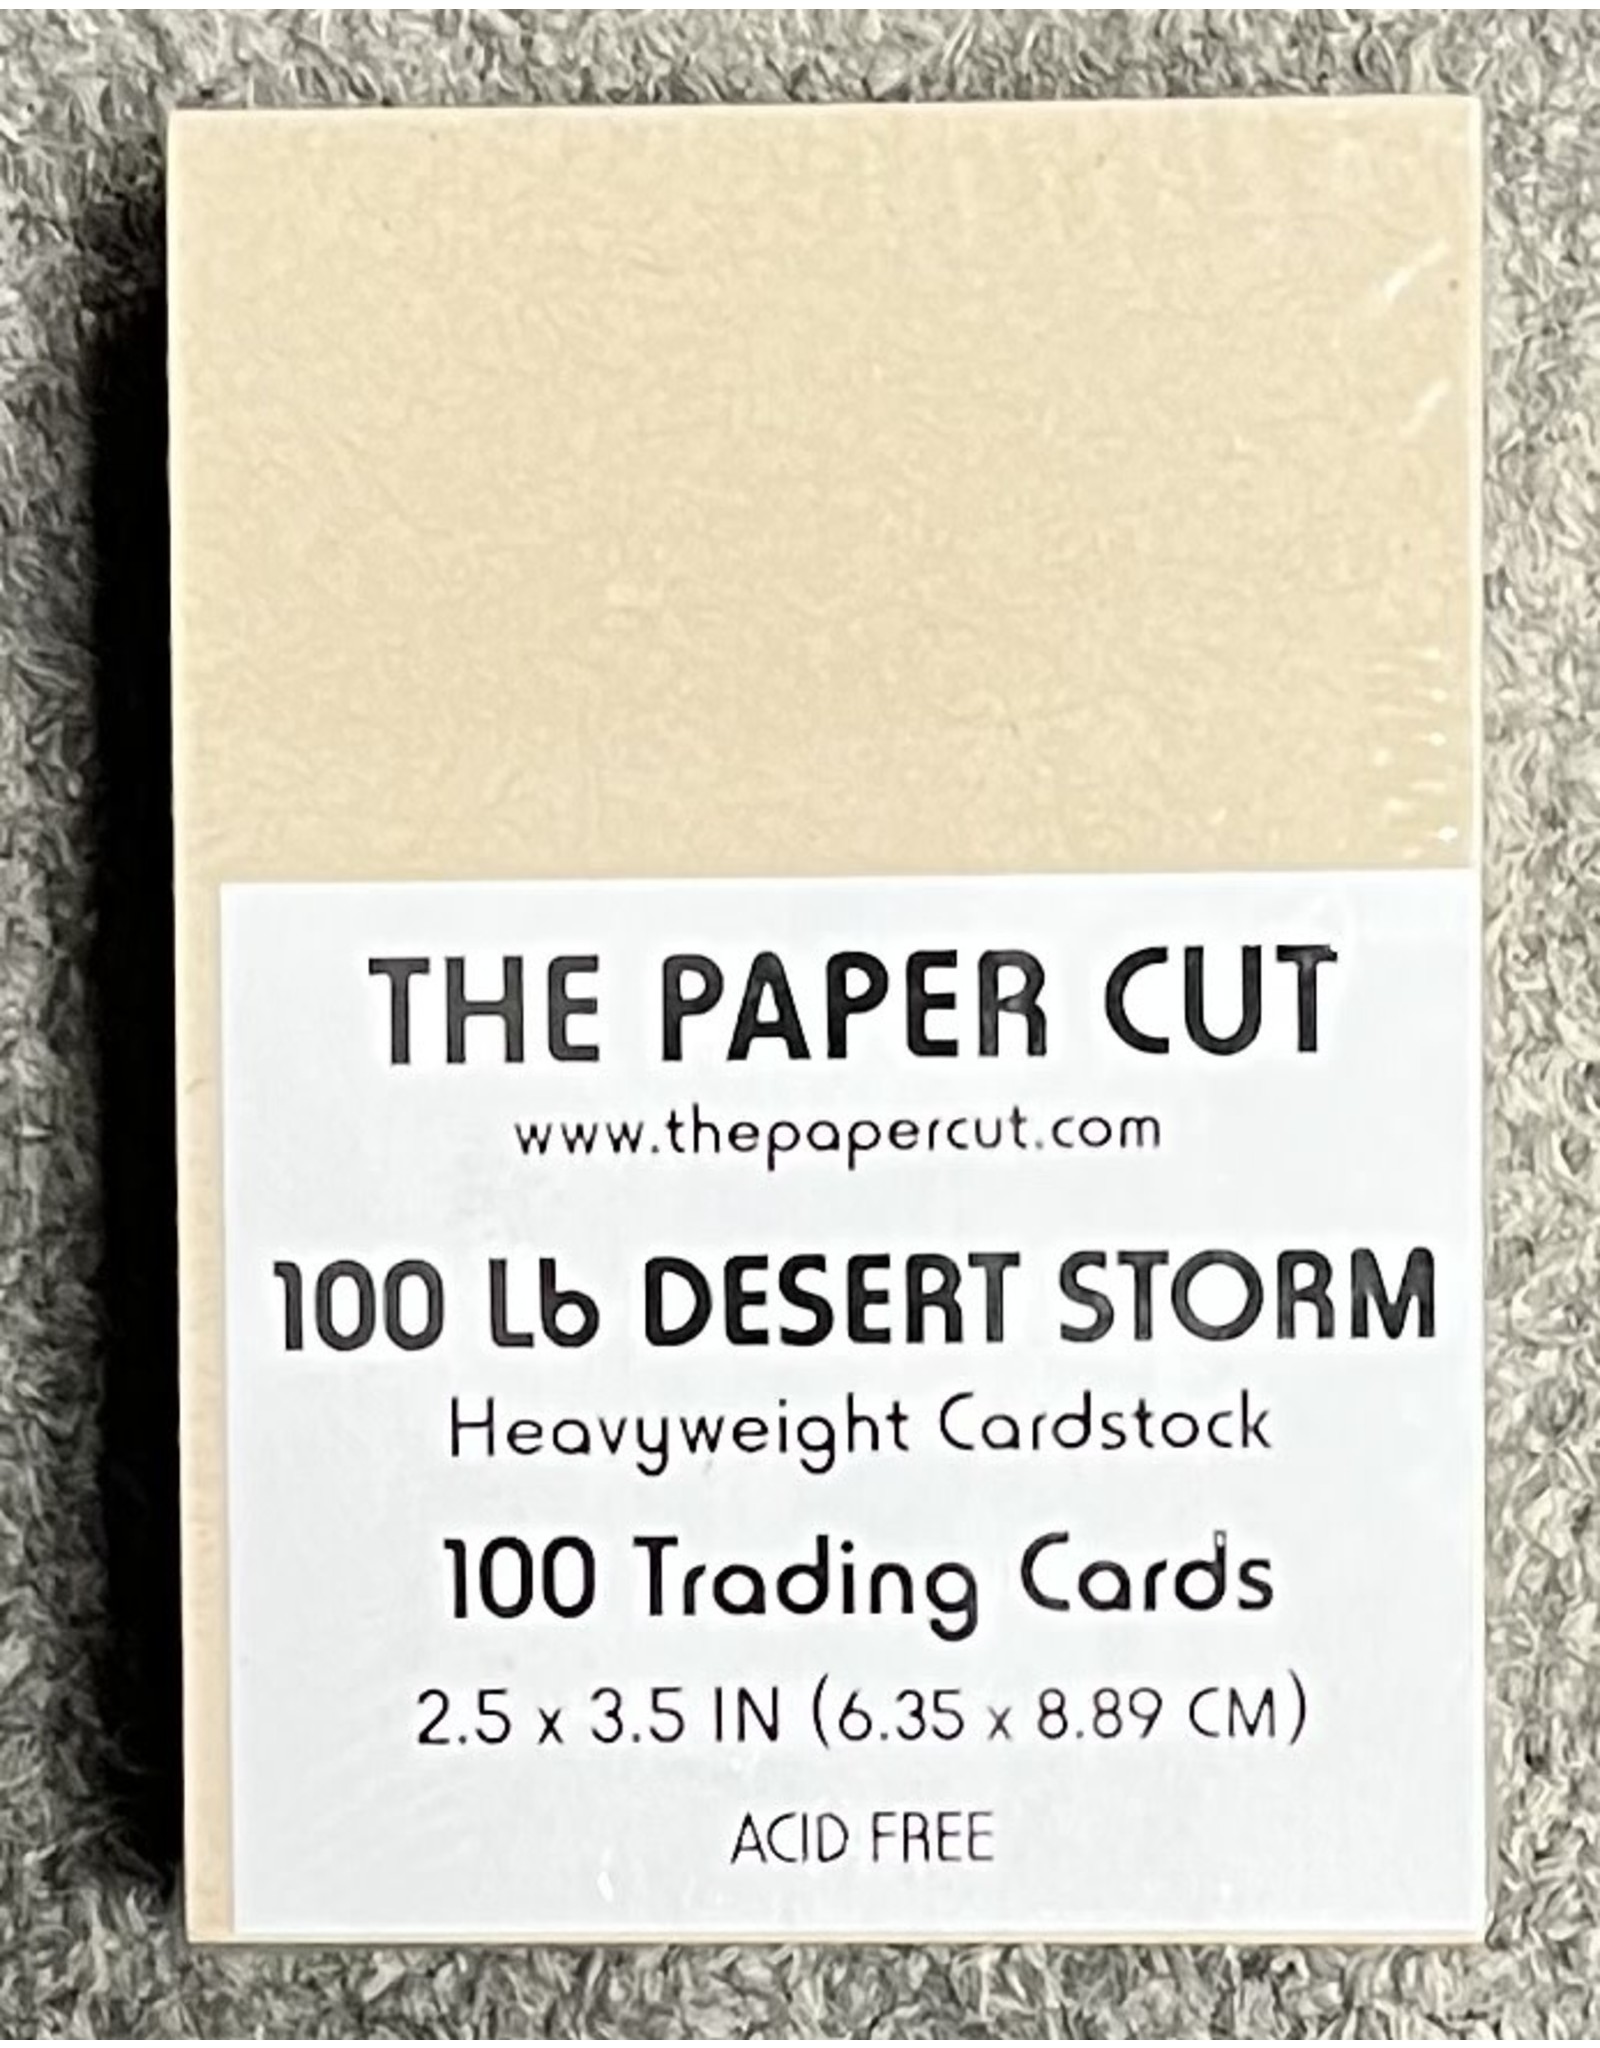 PAPER CUT THE PAPER CUT DESERT STORM TRADING CARDS 2.5x3.5 100/PK